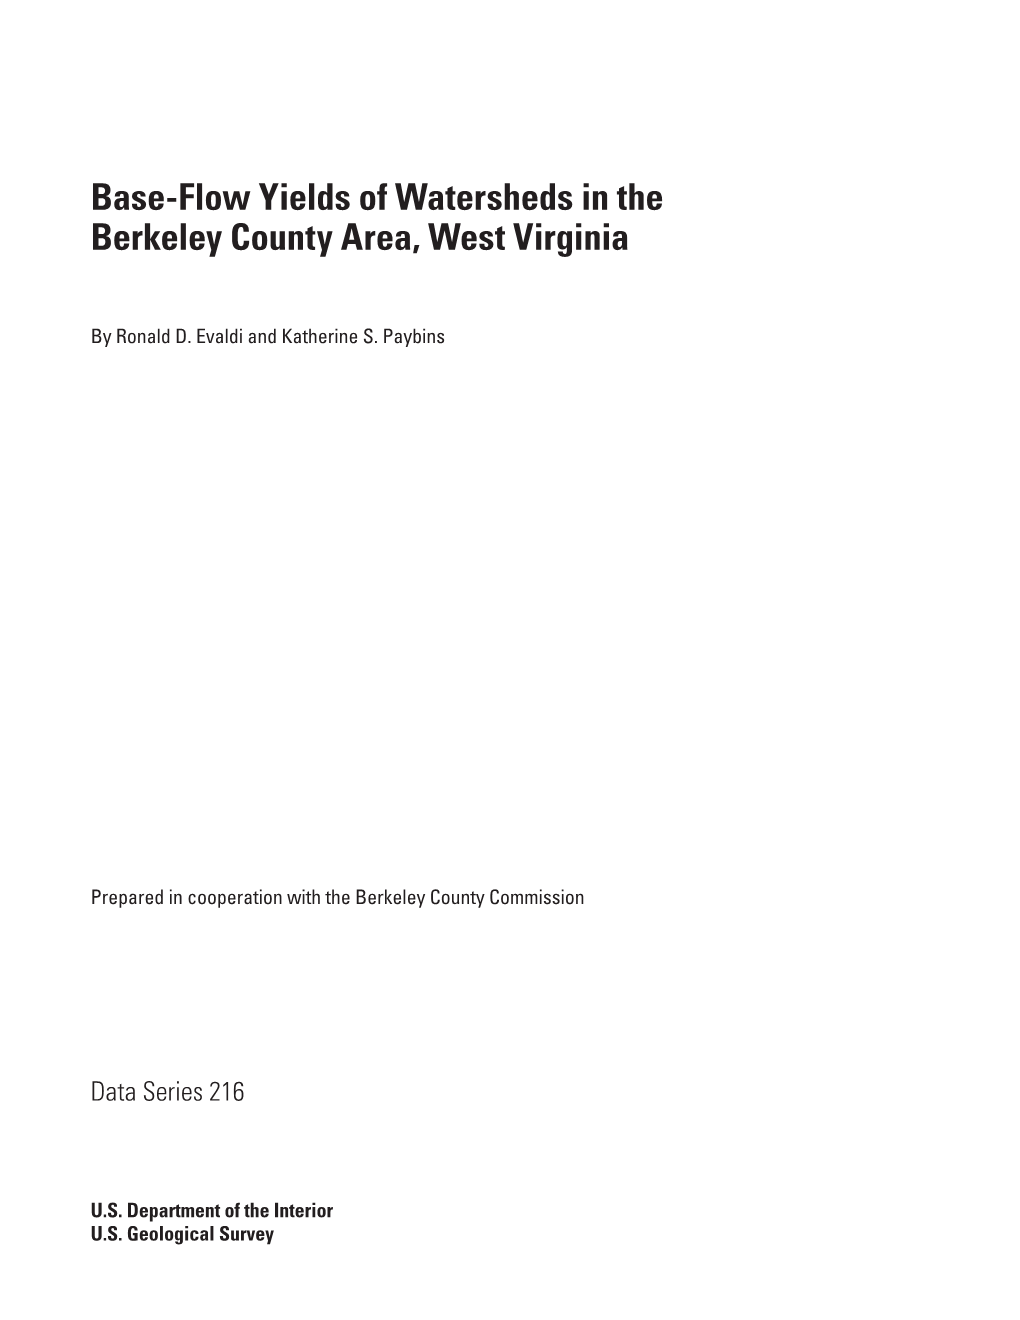 Base-Flow Yields of Watersheds in the Berkeley County Area, West Virginia